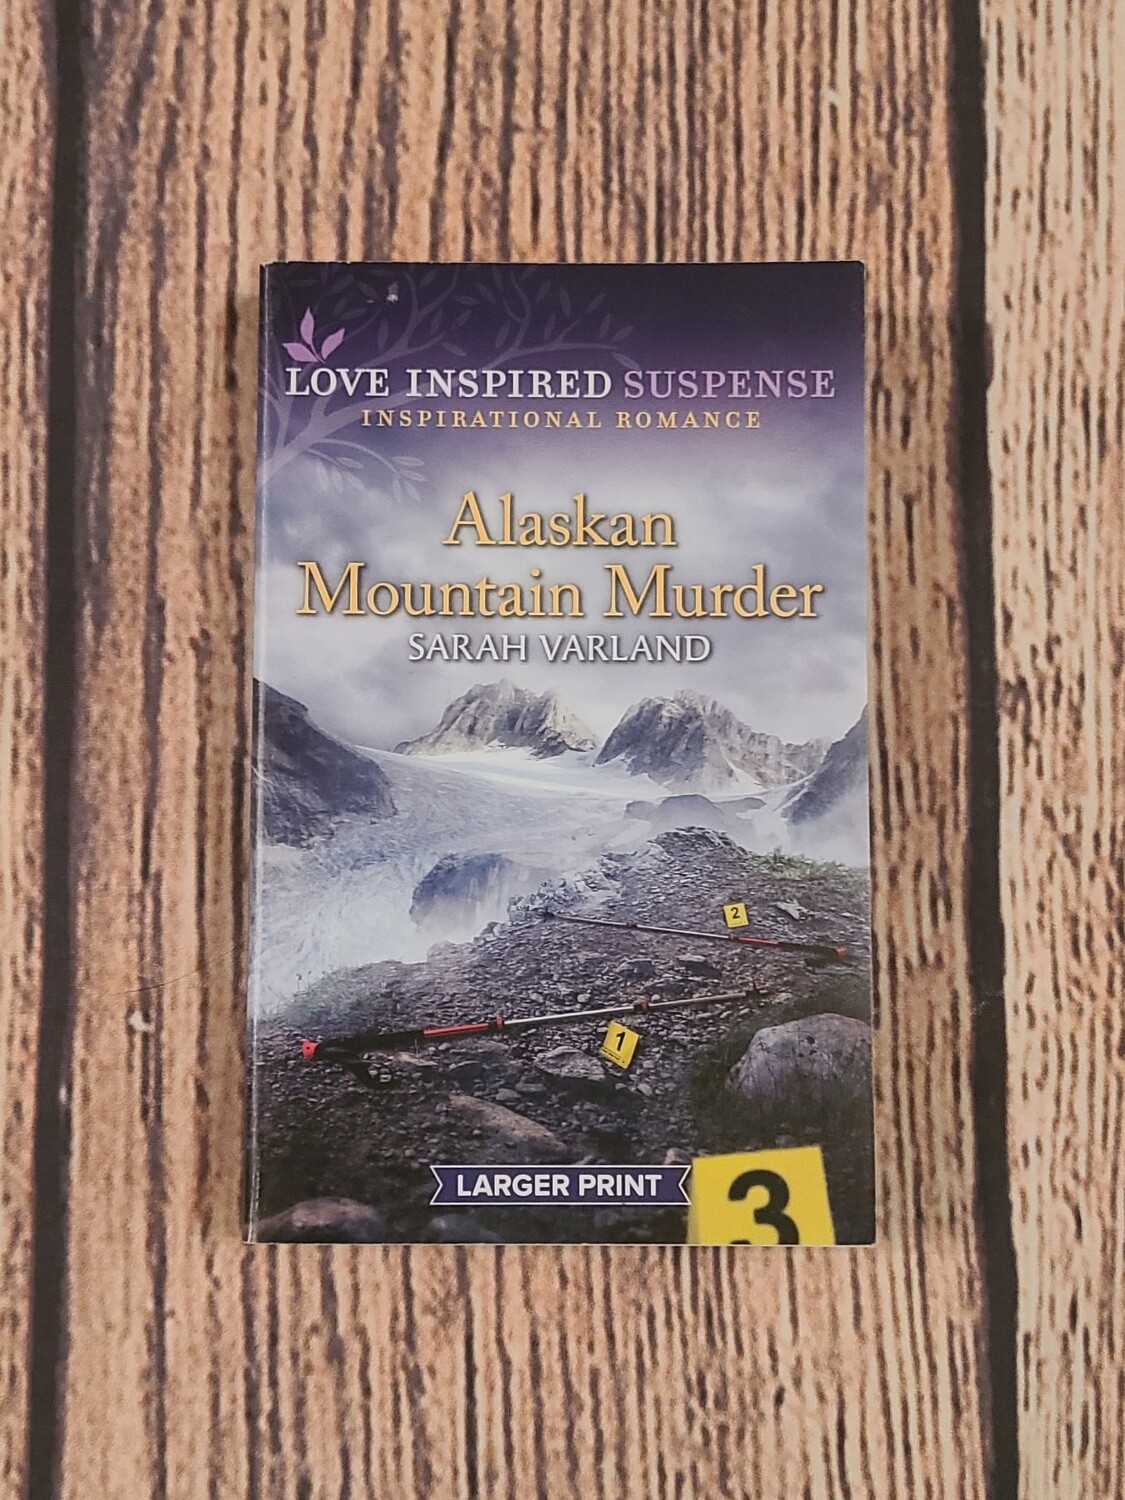 Alaskan Mountain Murder by Sarah Varland - Larger Print - Great Condition